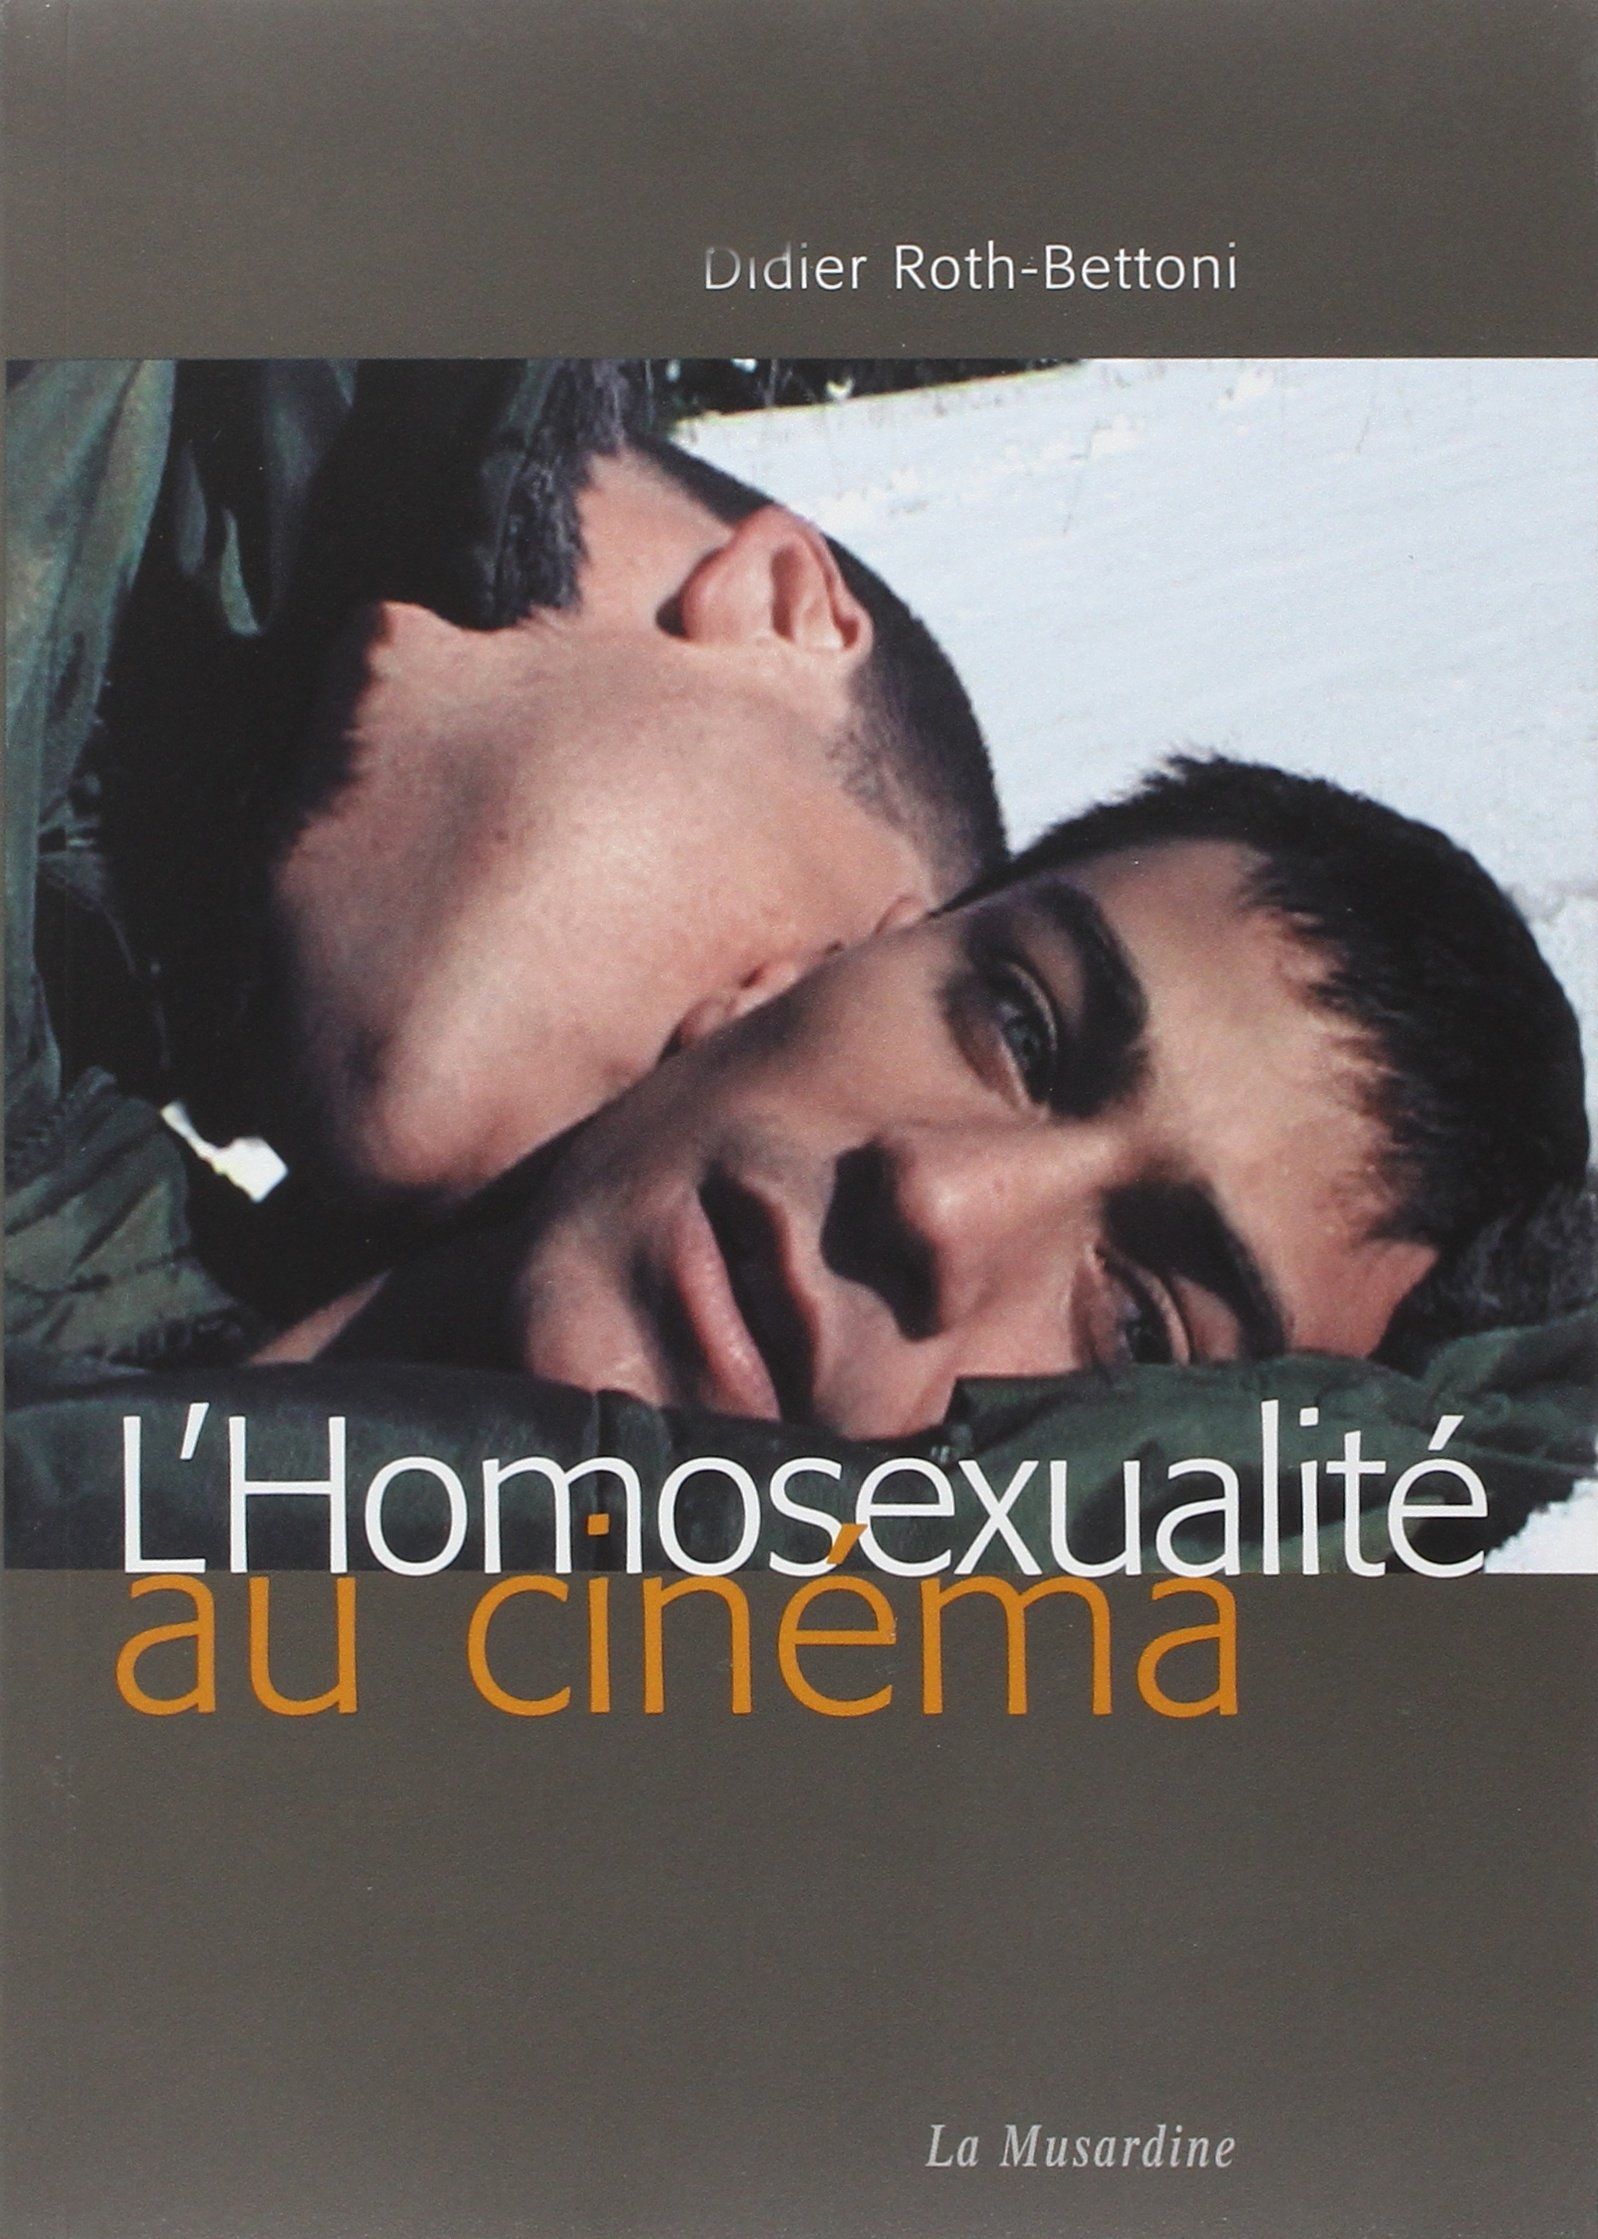 Homosexualité au cinema.jpg